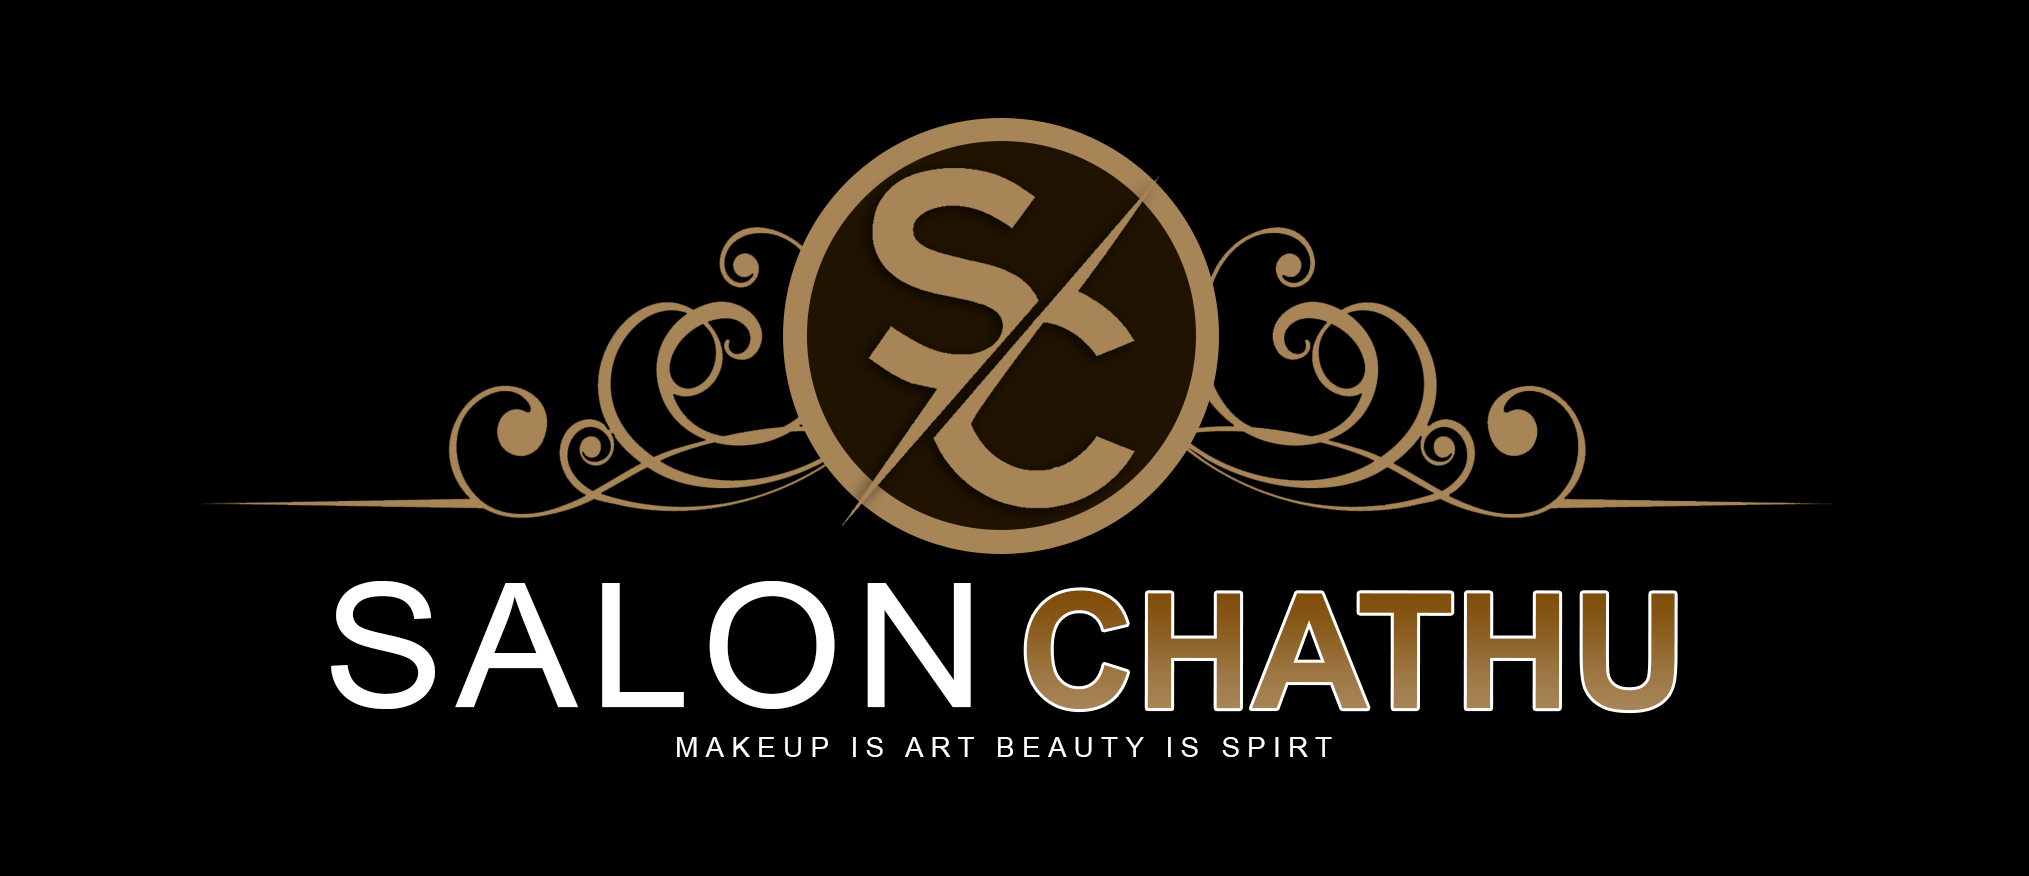 https://www.studiold.lk/project/salon-chathu-kalutara-logo-design/